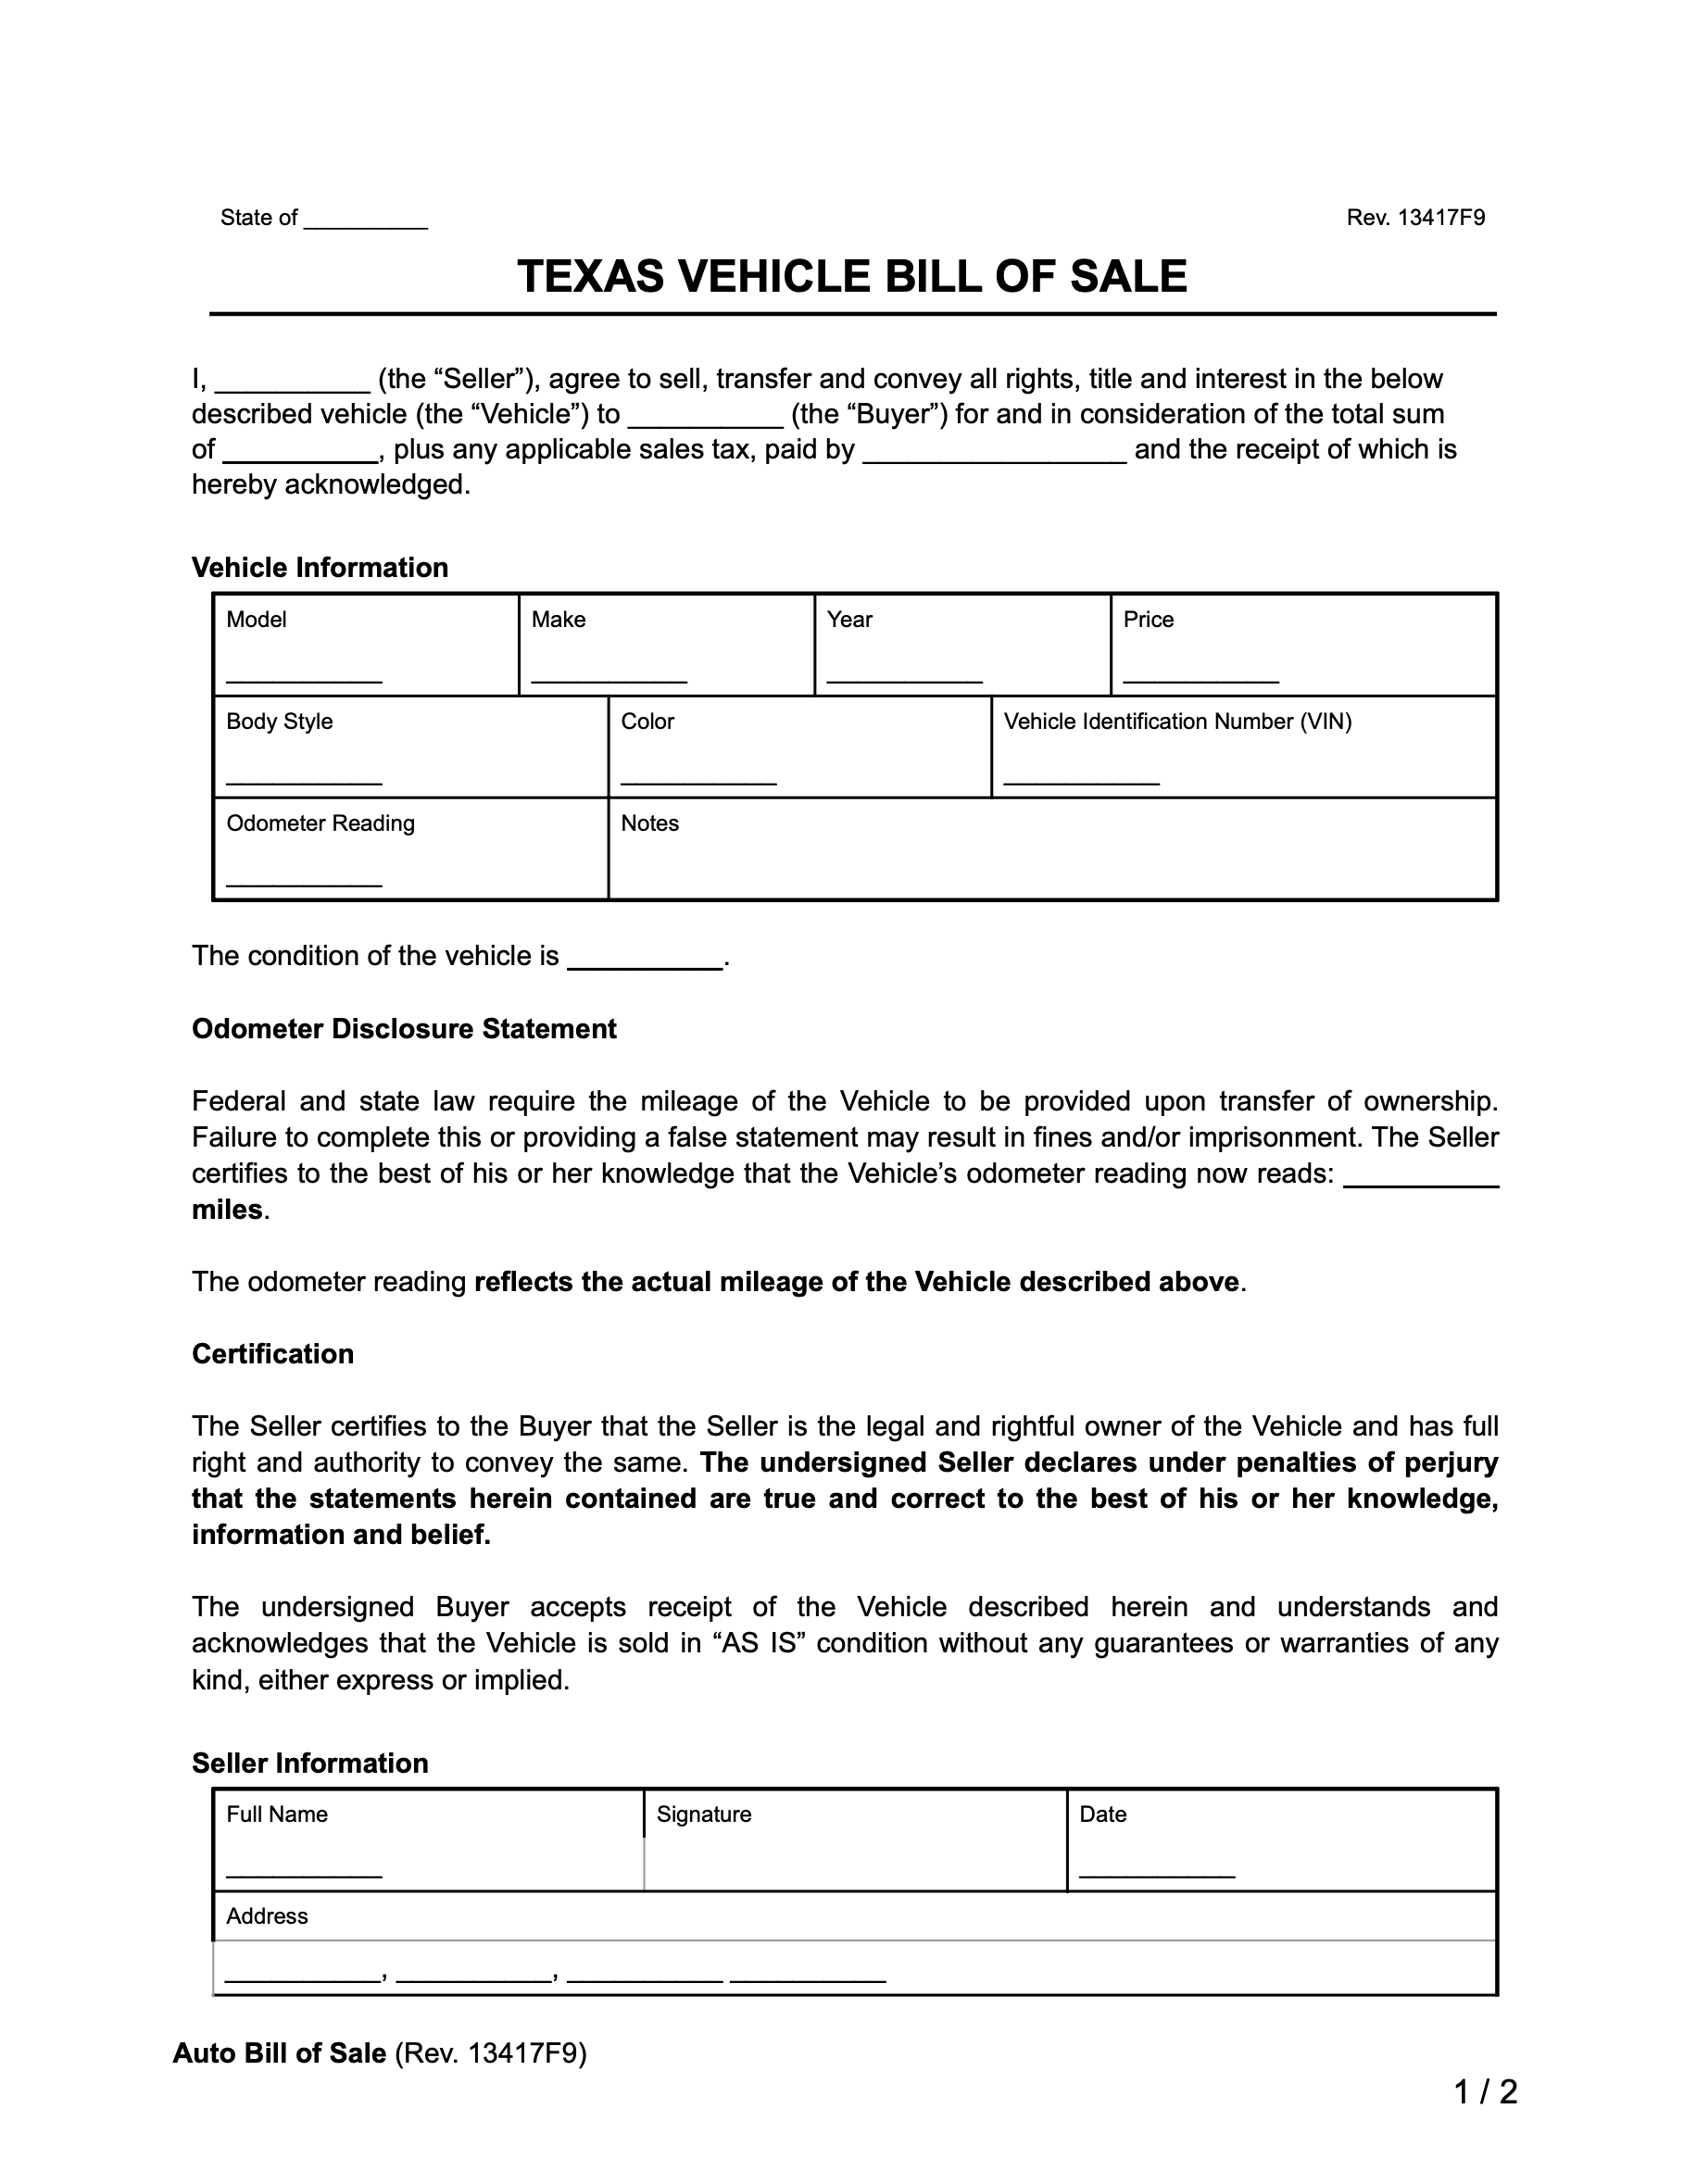 texas vehicle bill of sale